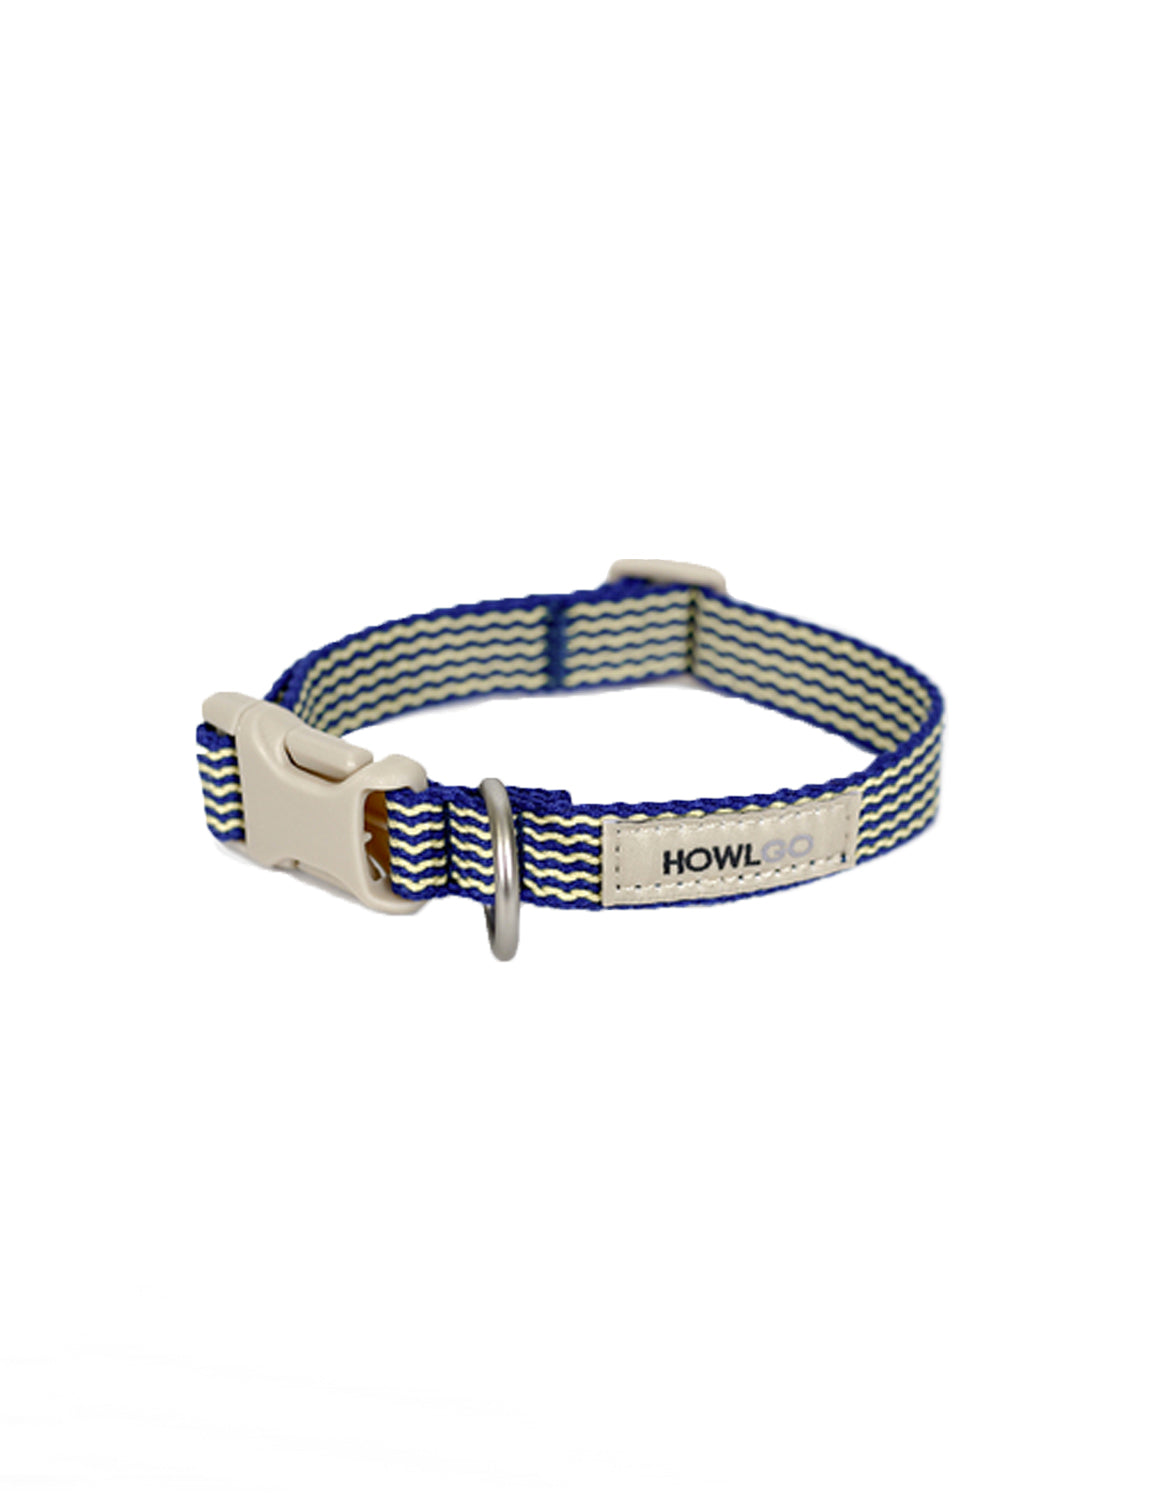 Howlgo Basic Collar, blue